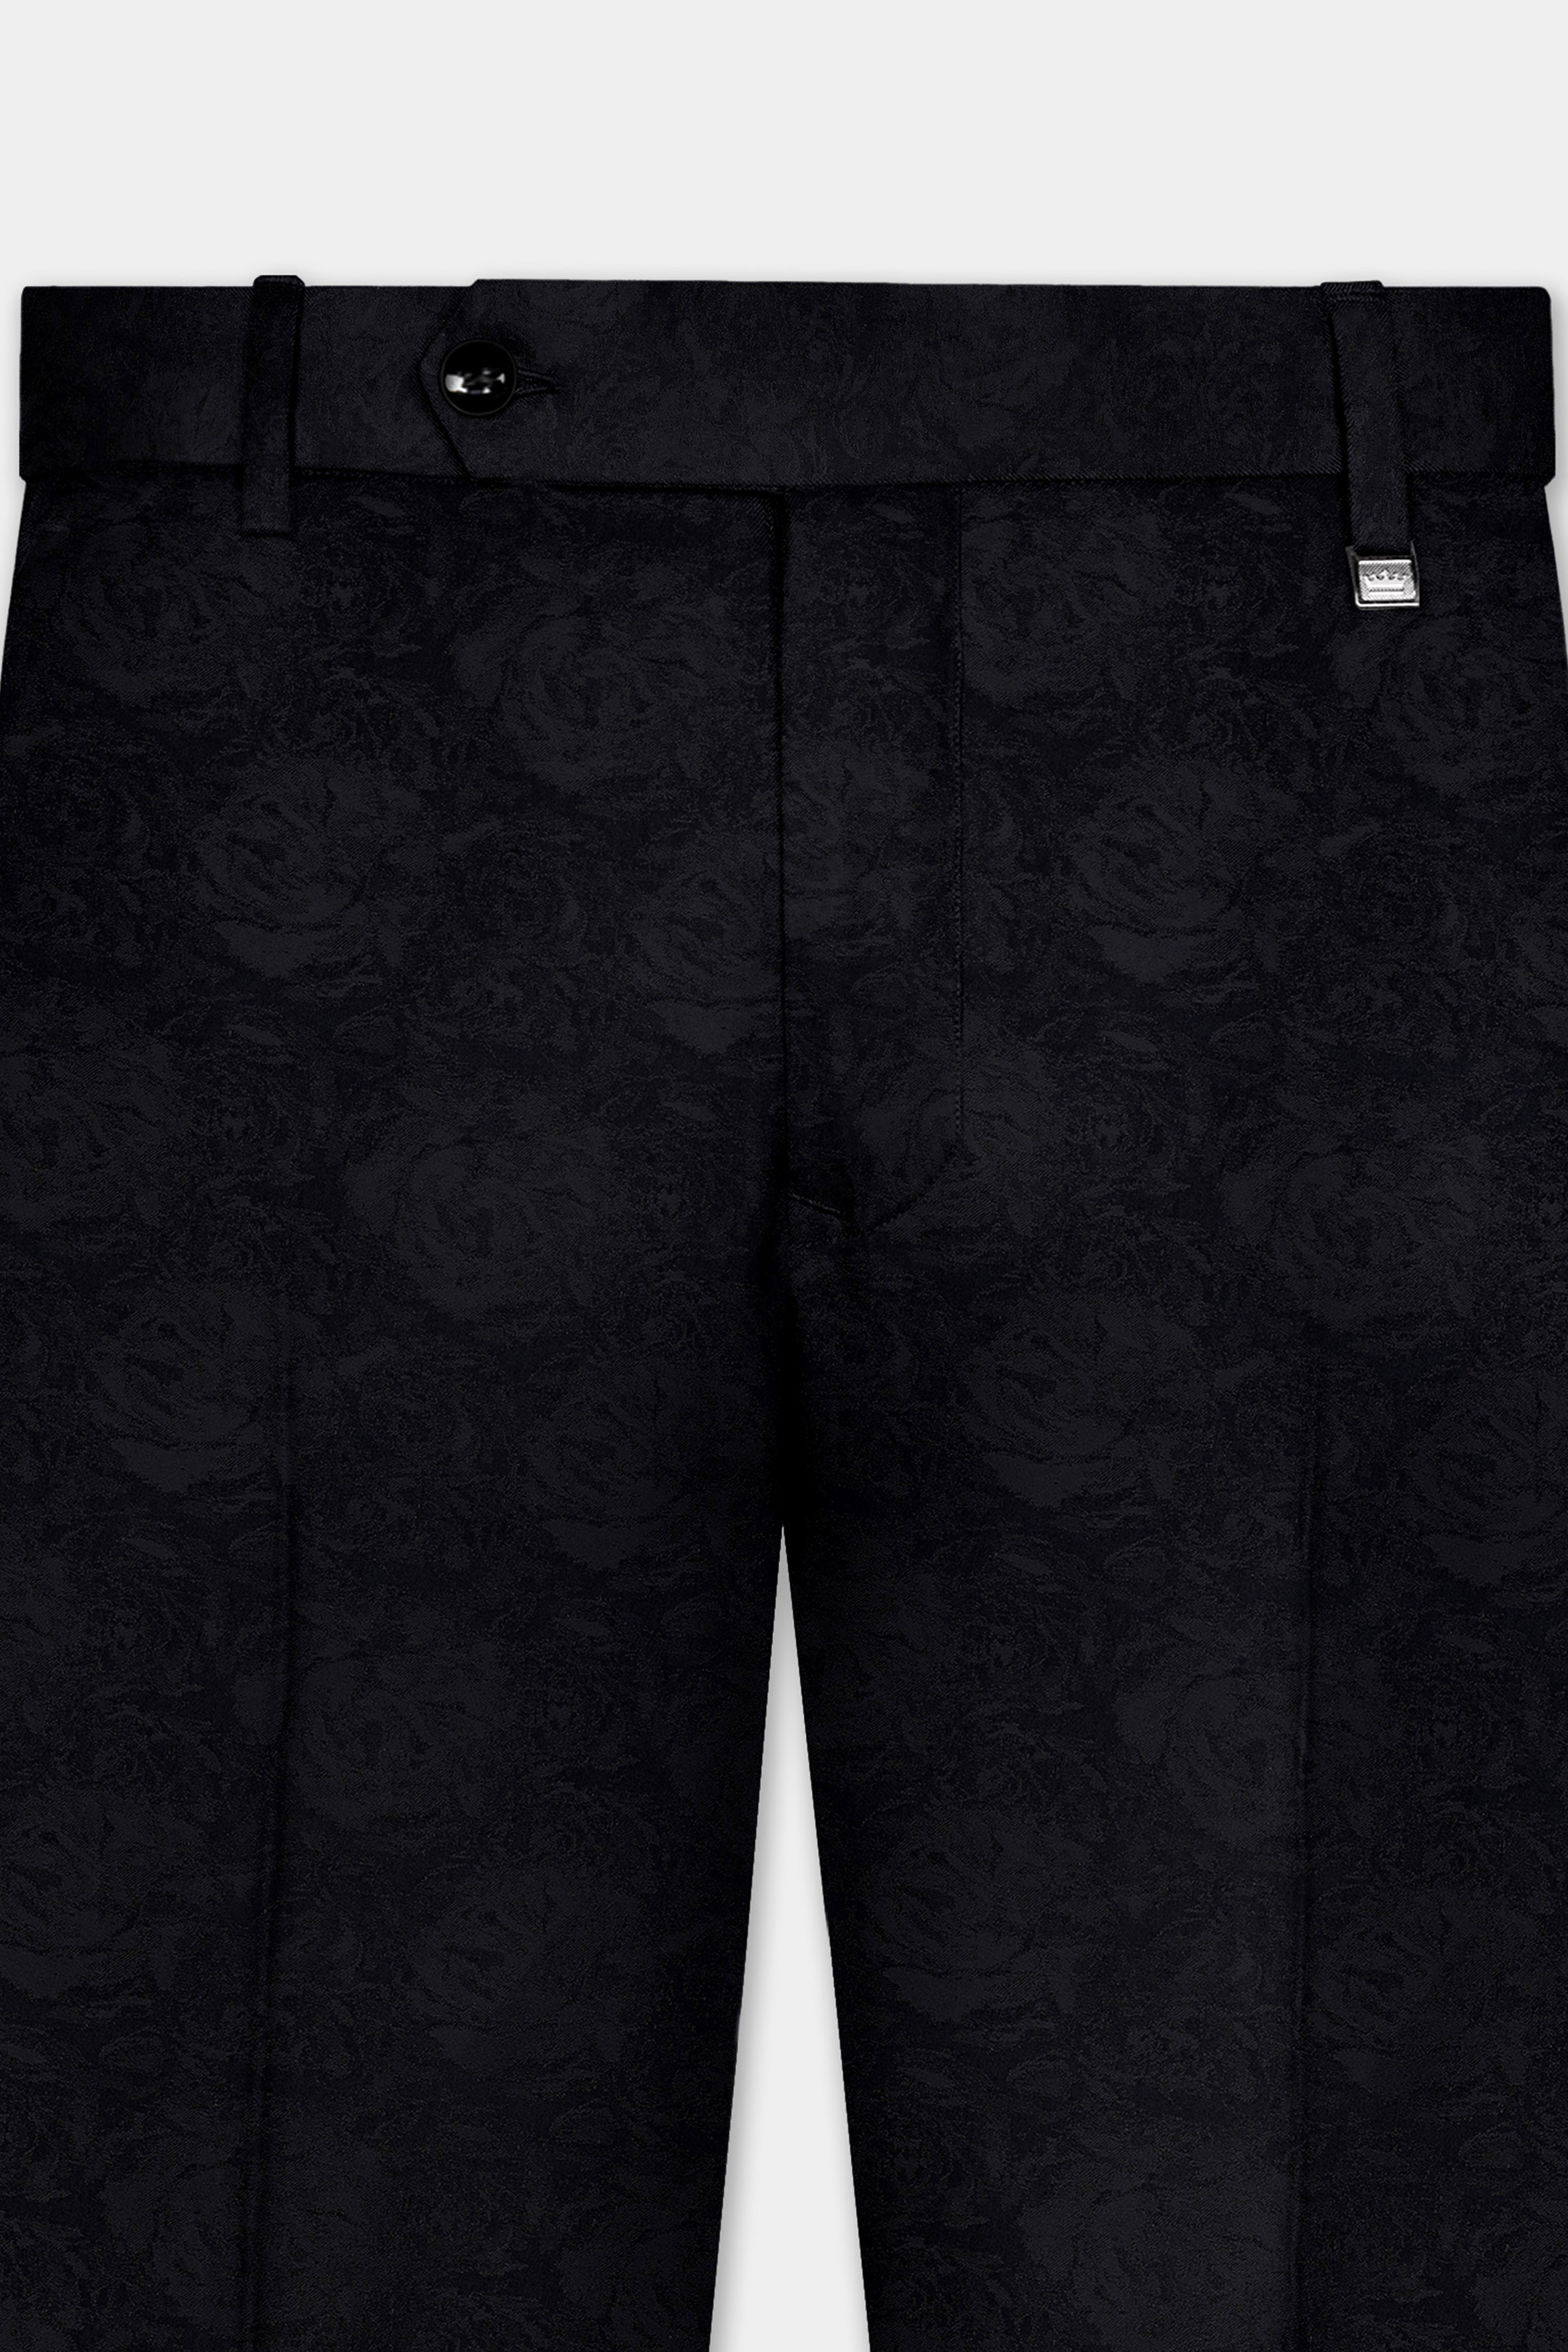 Jade Black Jacquard Textured Stretchable Waistband Pant